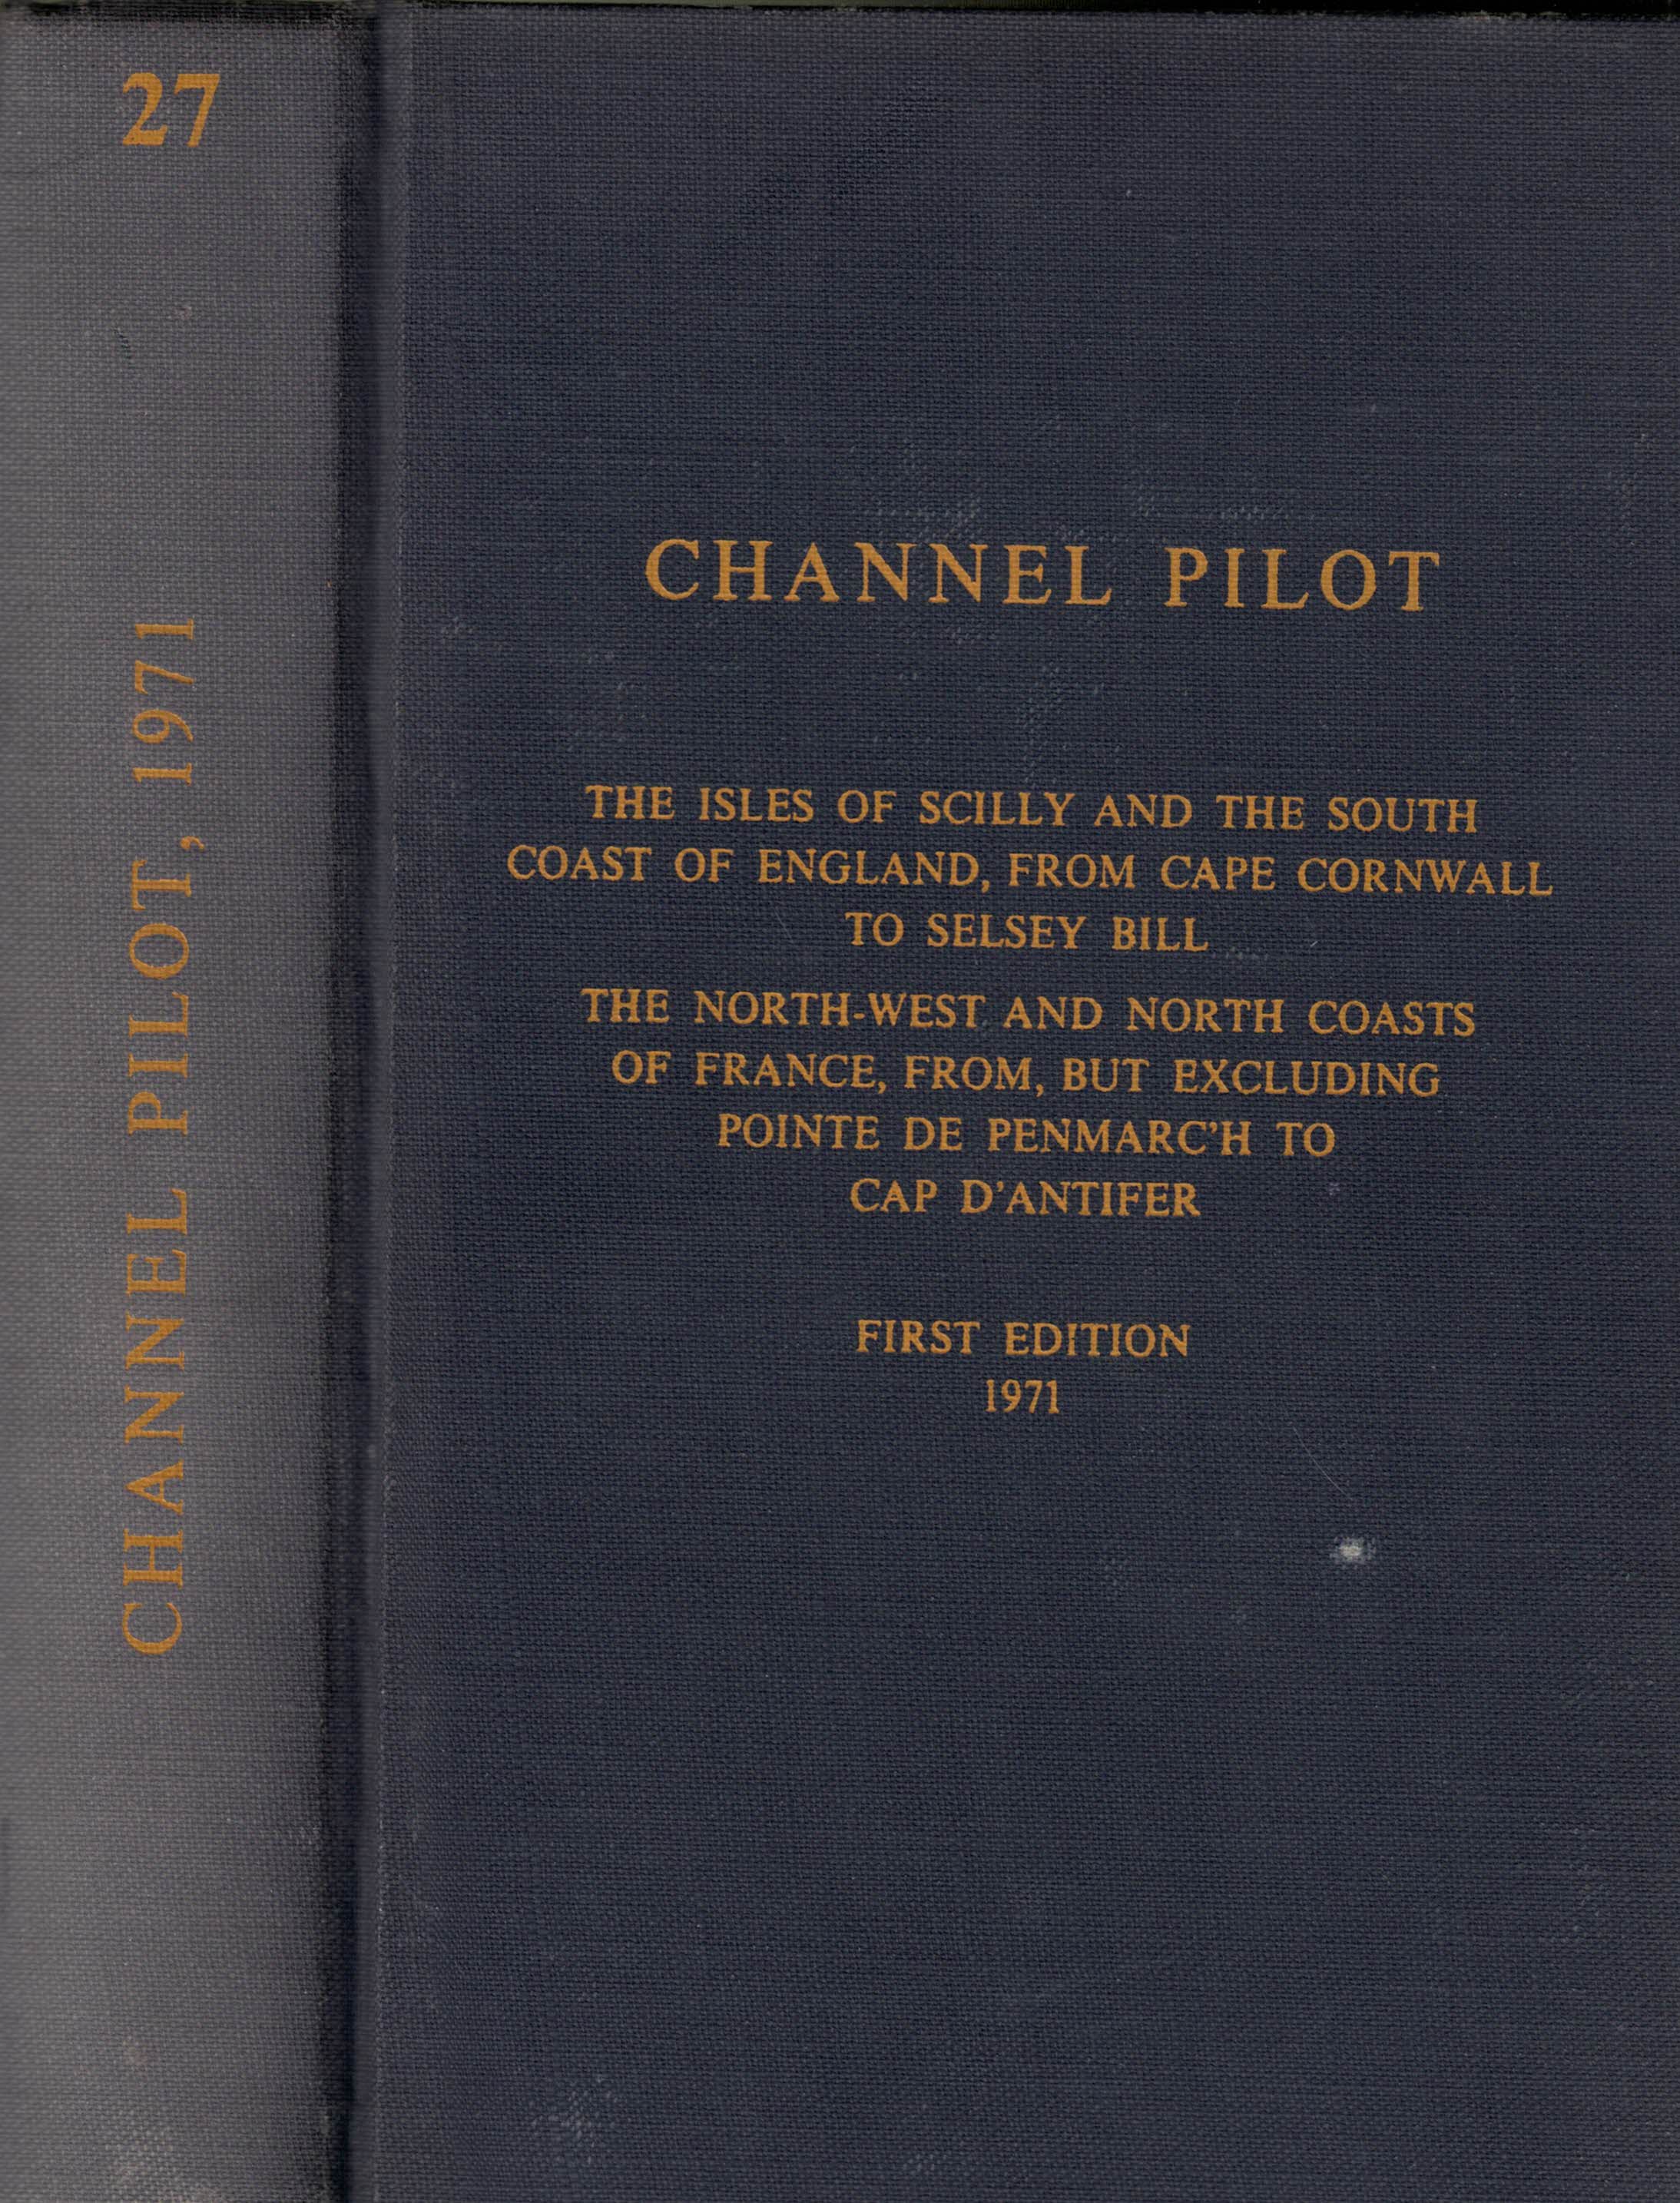 Channel Pilot. Admiralty Pilot Series No 27. [1971]